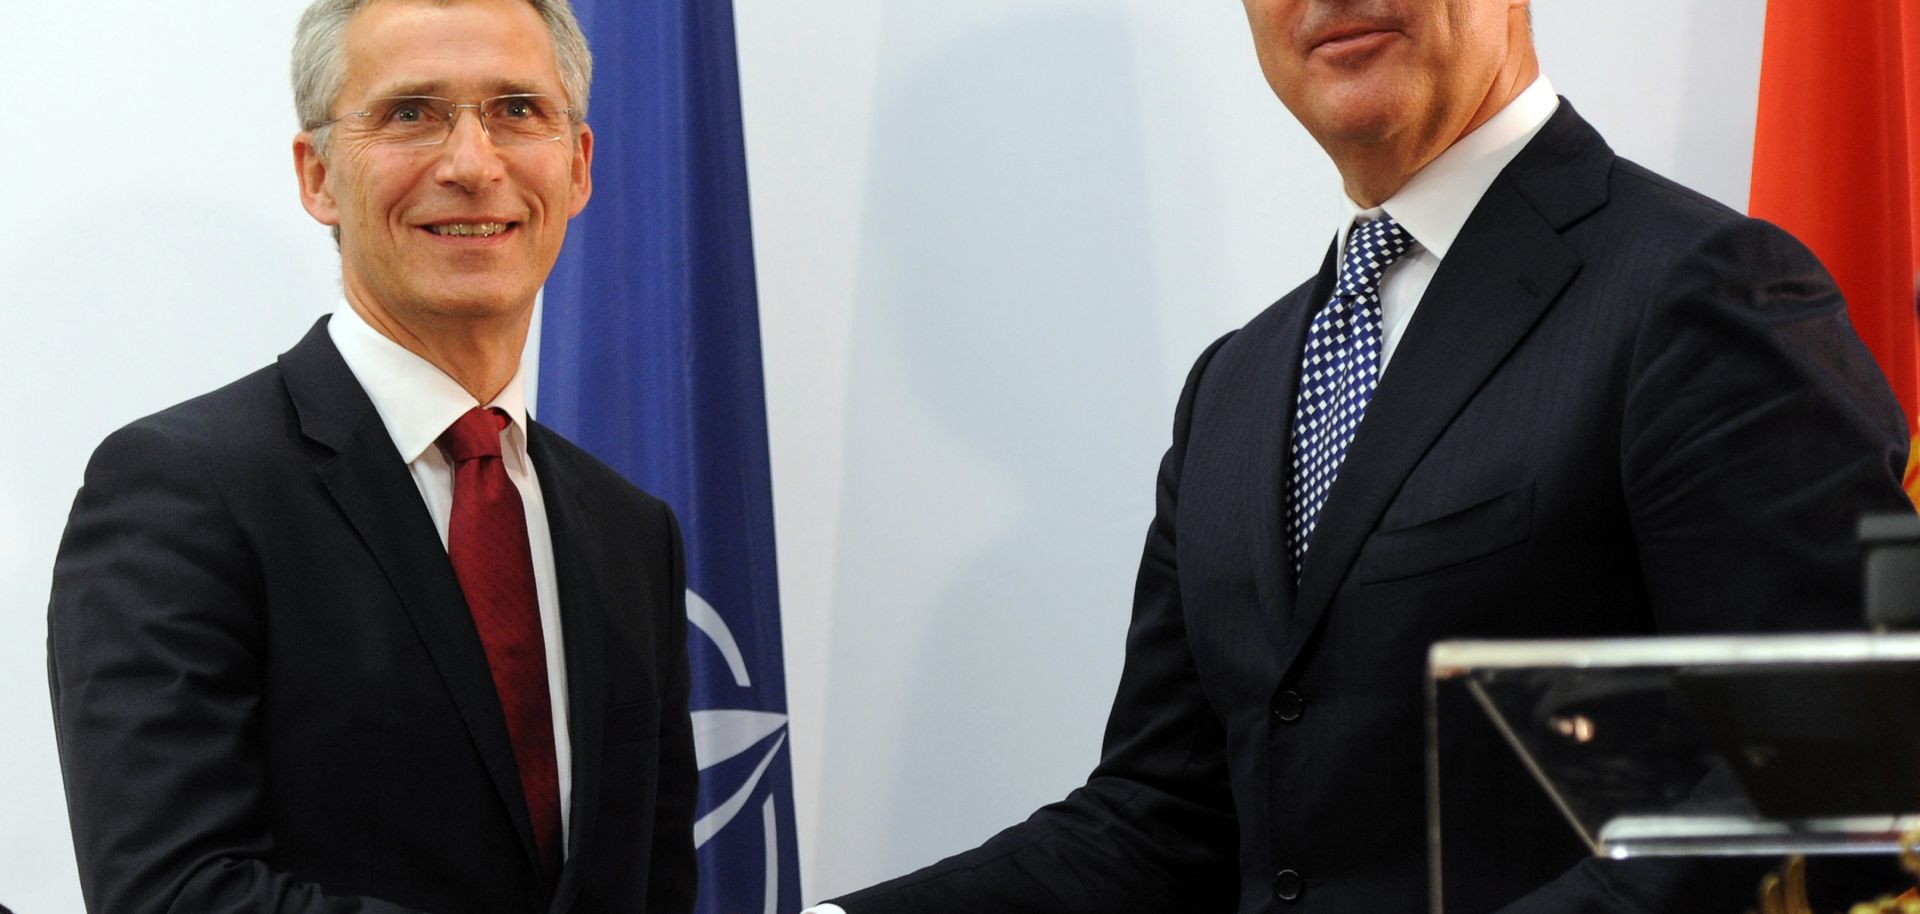 Montenegro's Prime Minister Milo Djukanovic shakes hands with NATO Secretary General Jens Stoltenberg.